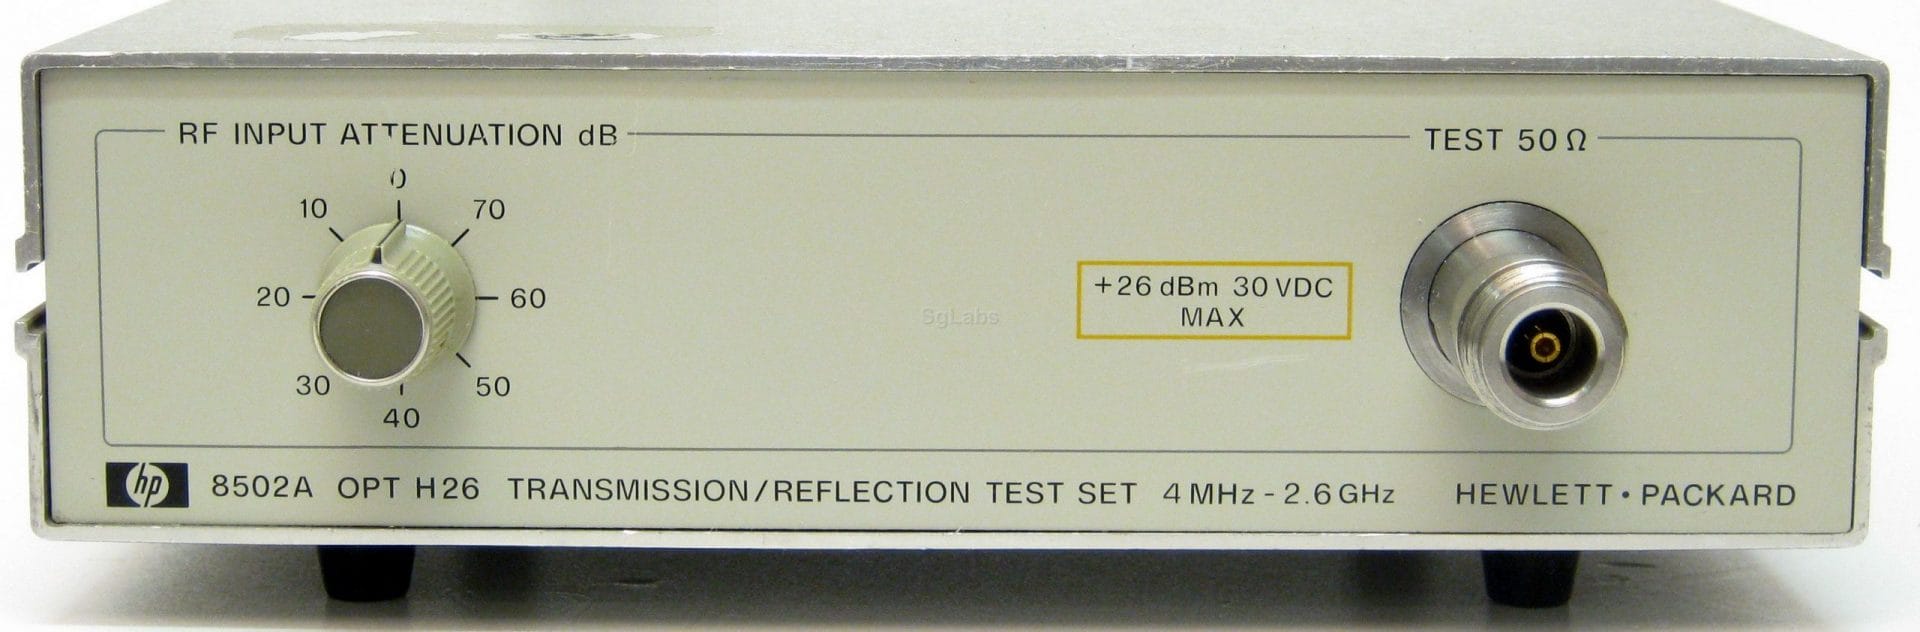 Agilent 8502A Transmission Test Kit